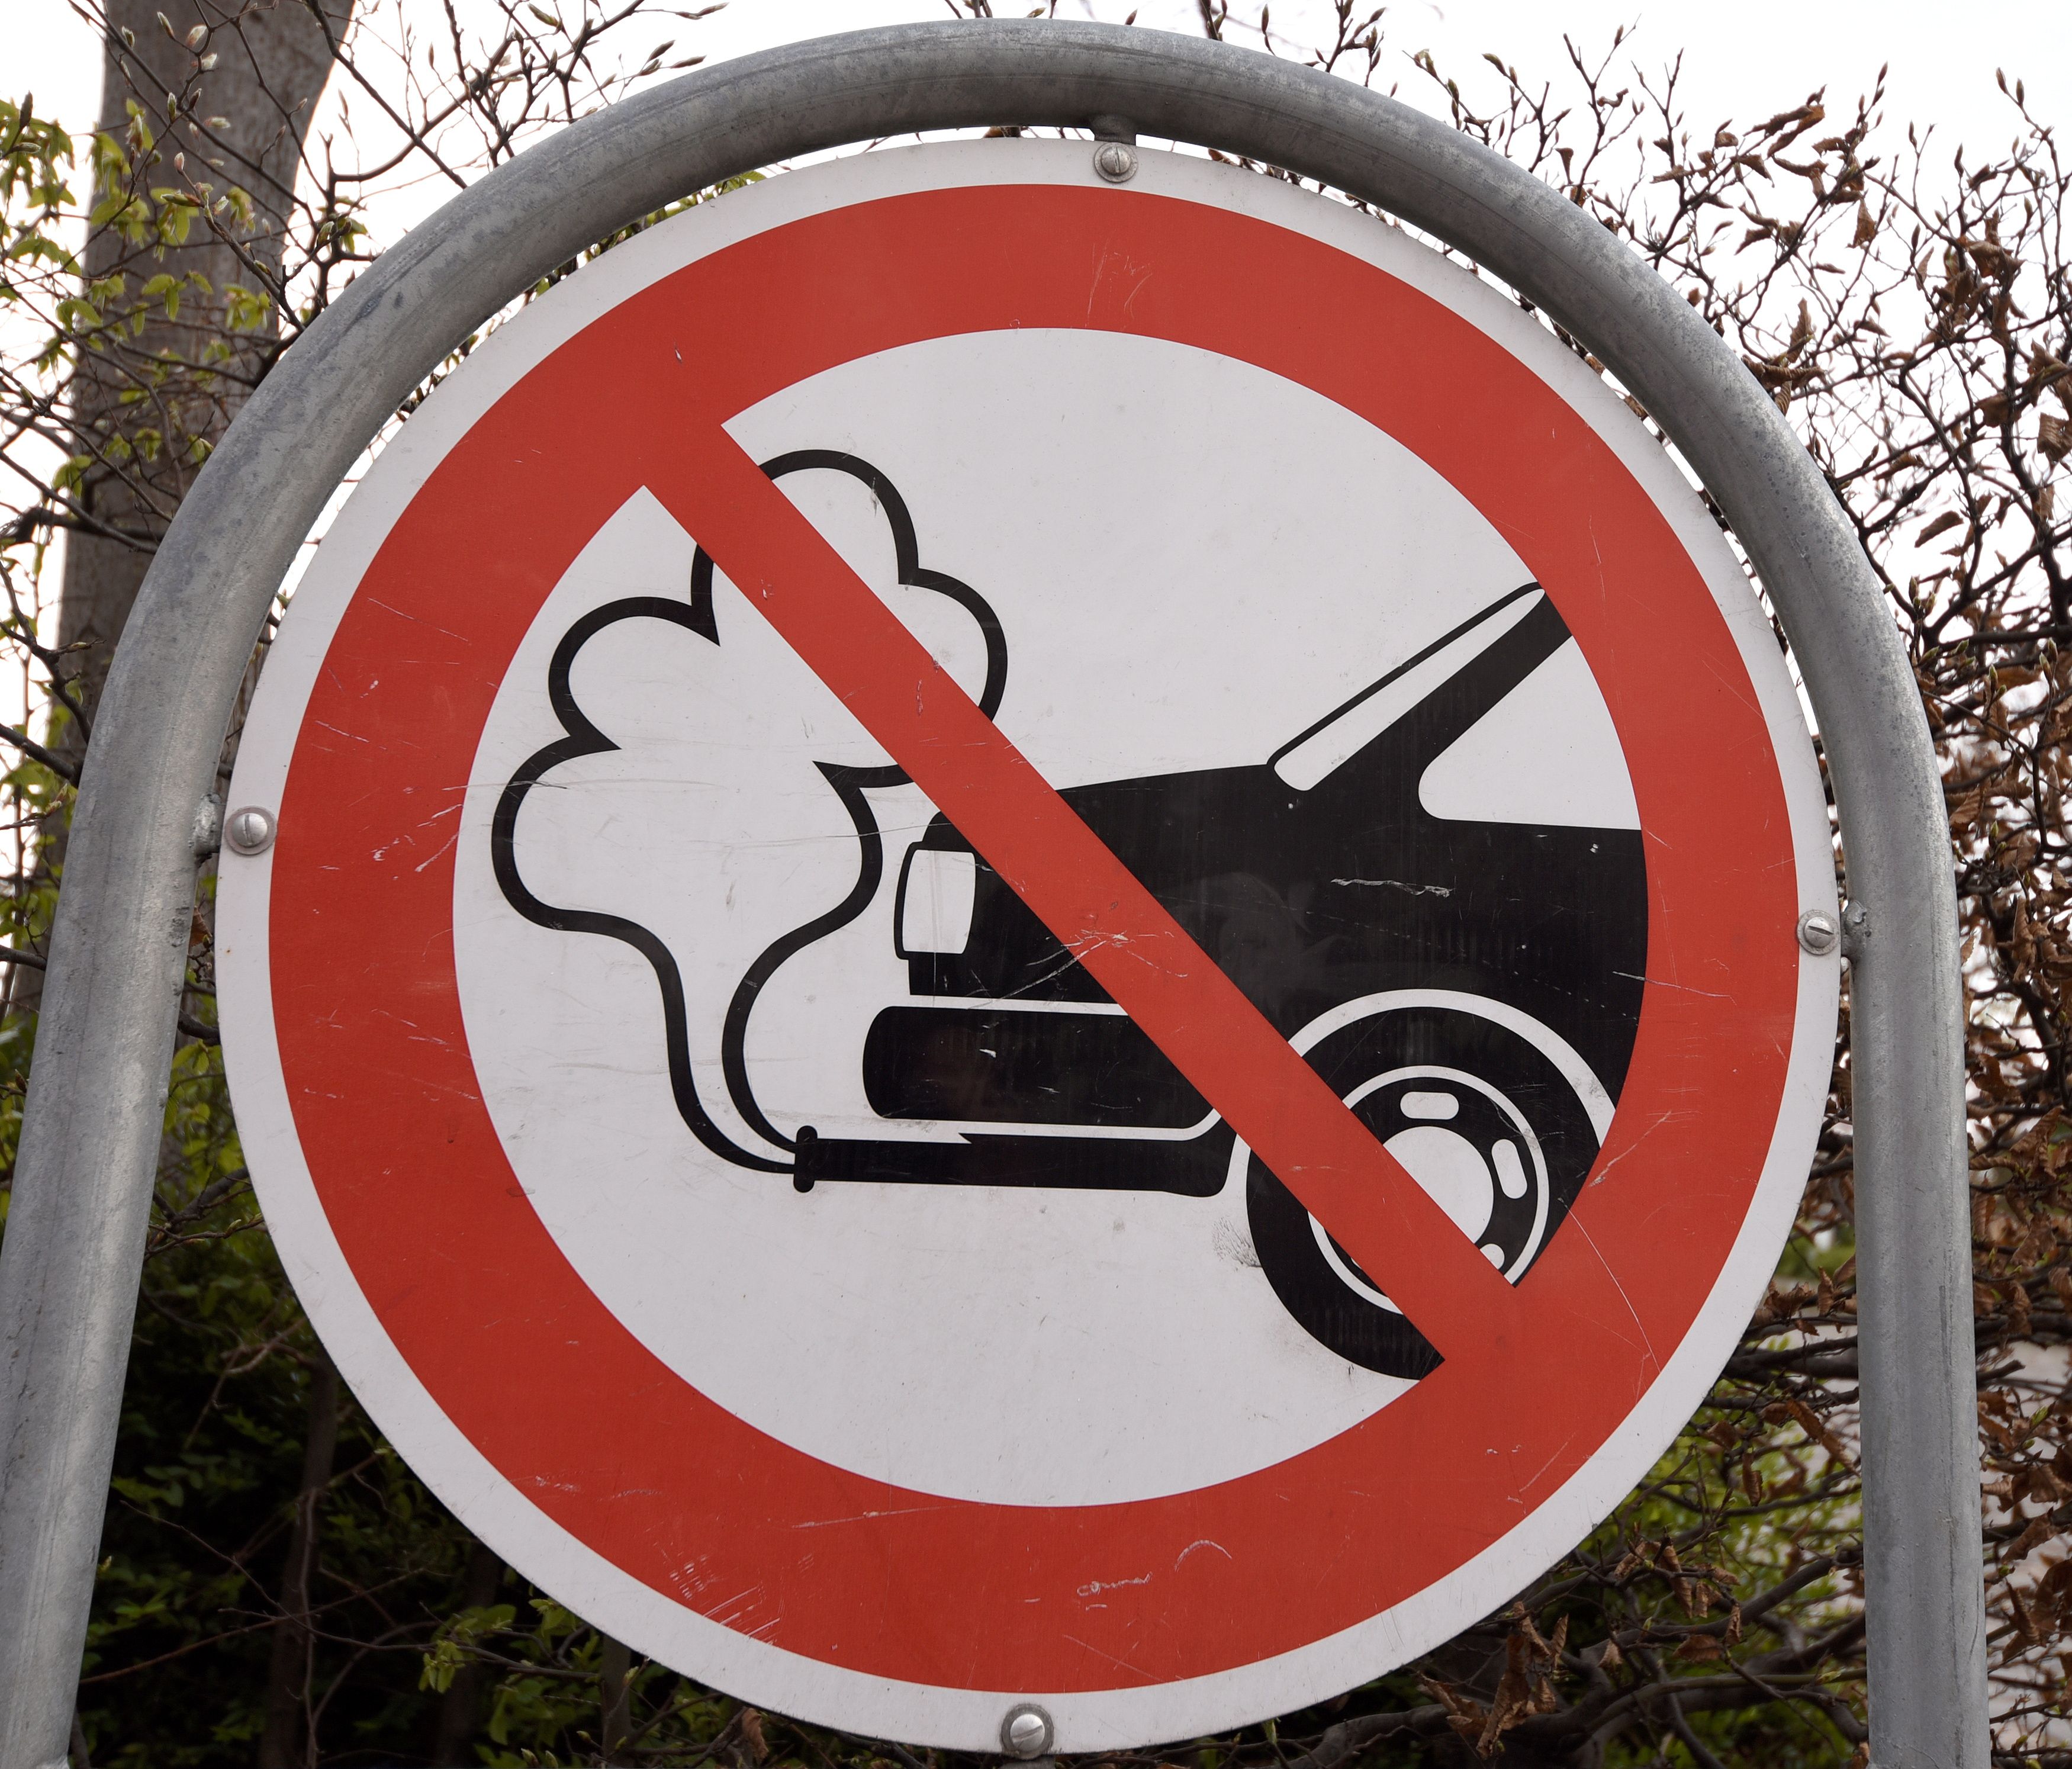 An anti-exhaust emission traffic sign is pictured in Copenhagen, Denmark April 18, 2017.  REUTERS/Fabian Bimmer